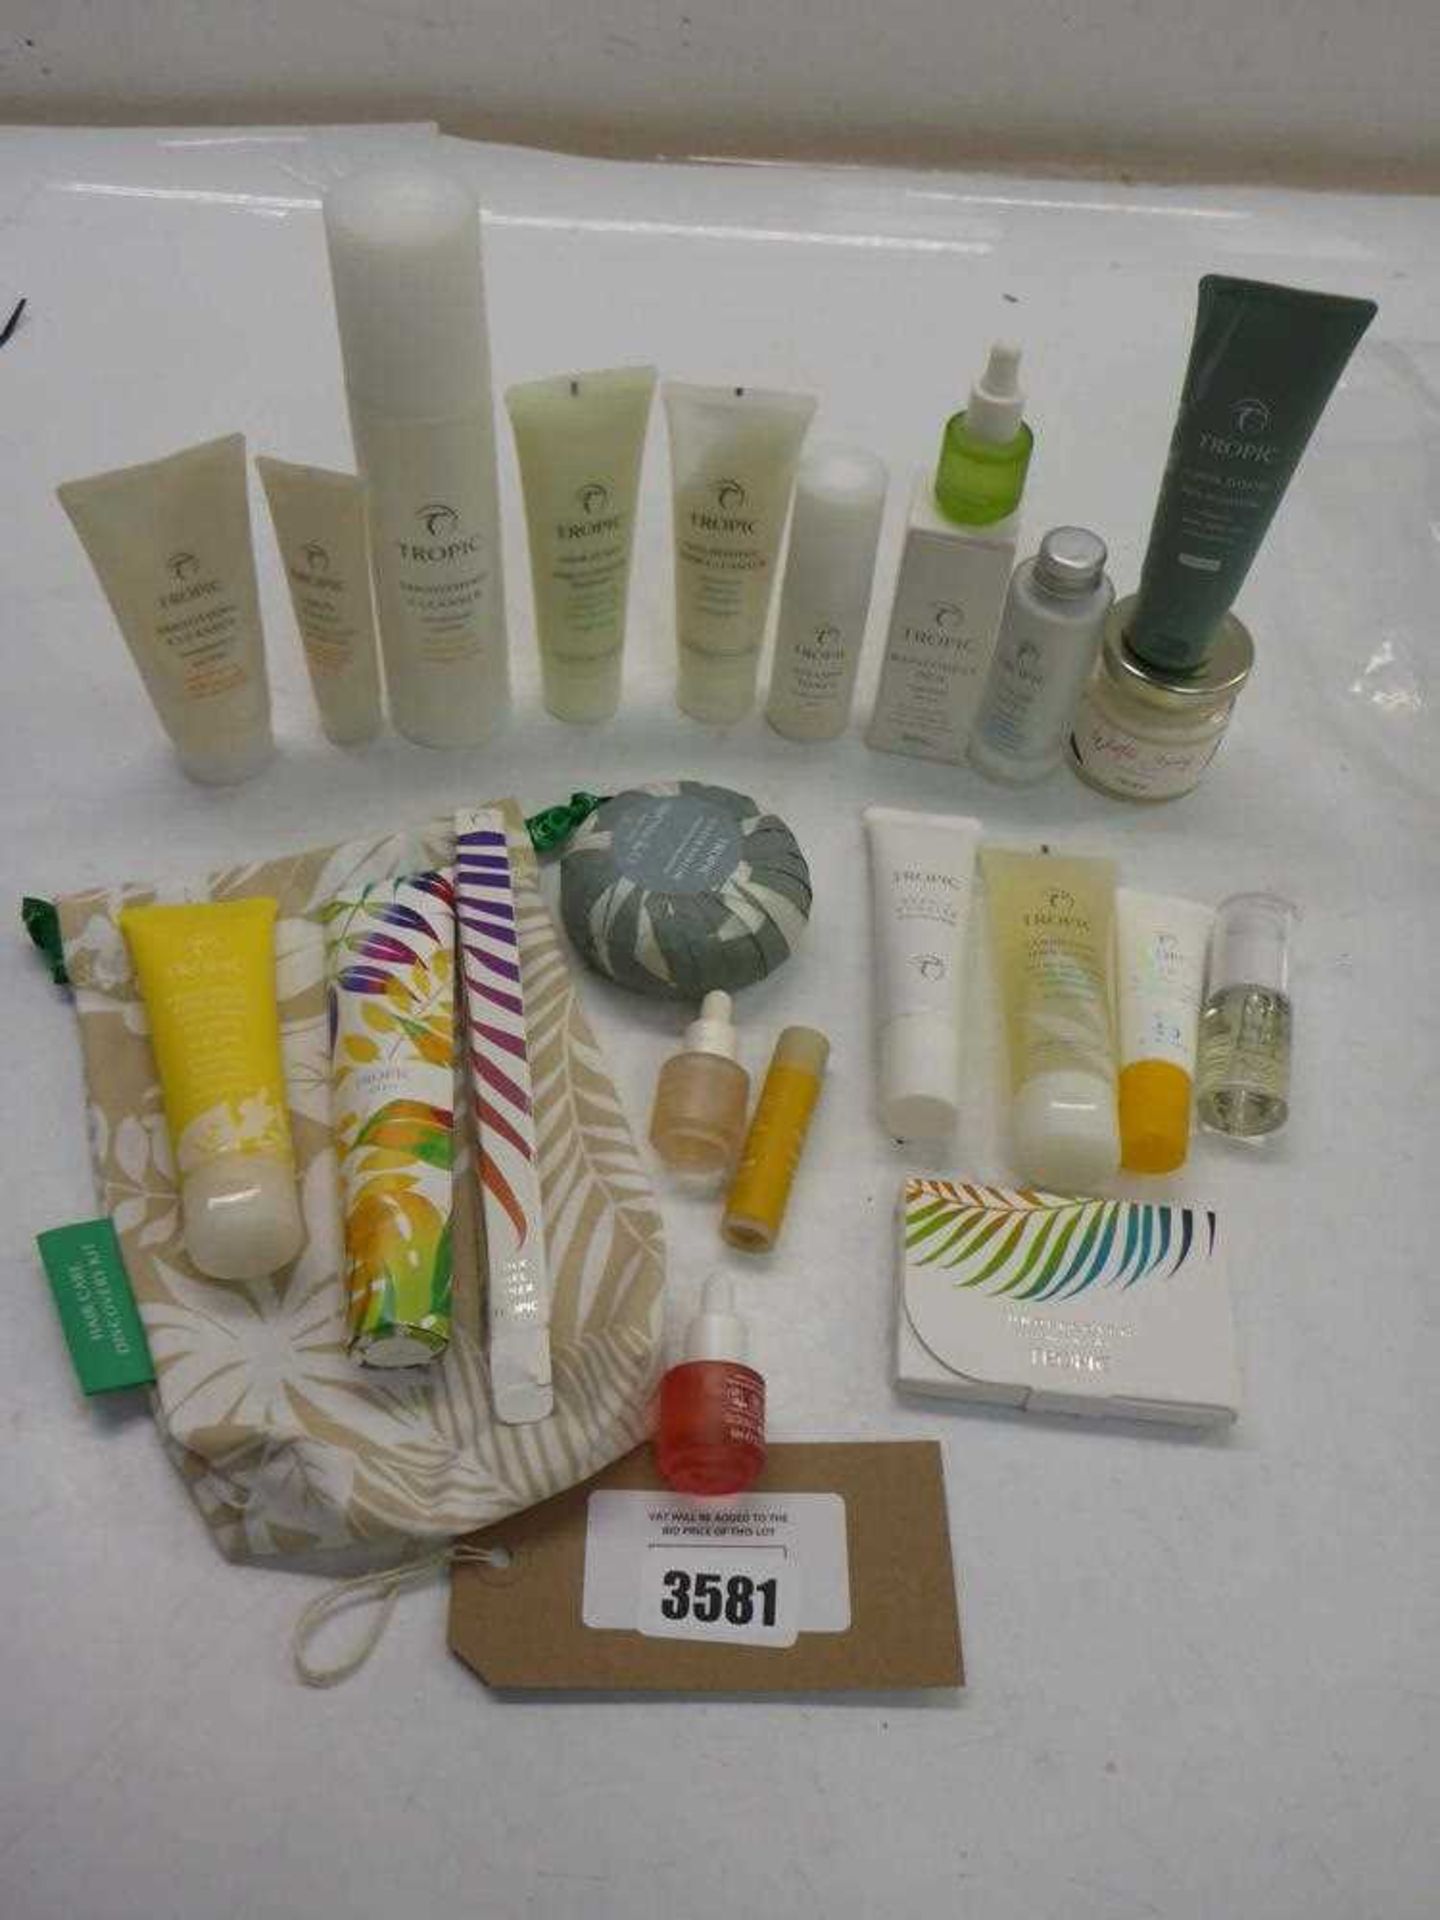 +VAT Tropic beauty products including Skin Feast, Cleanser, serum, toner, masks, soap etc